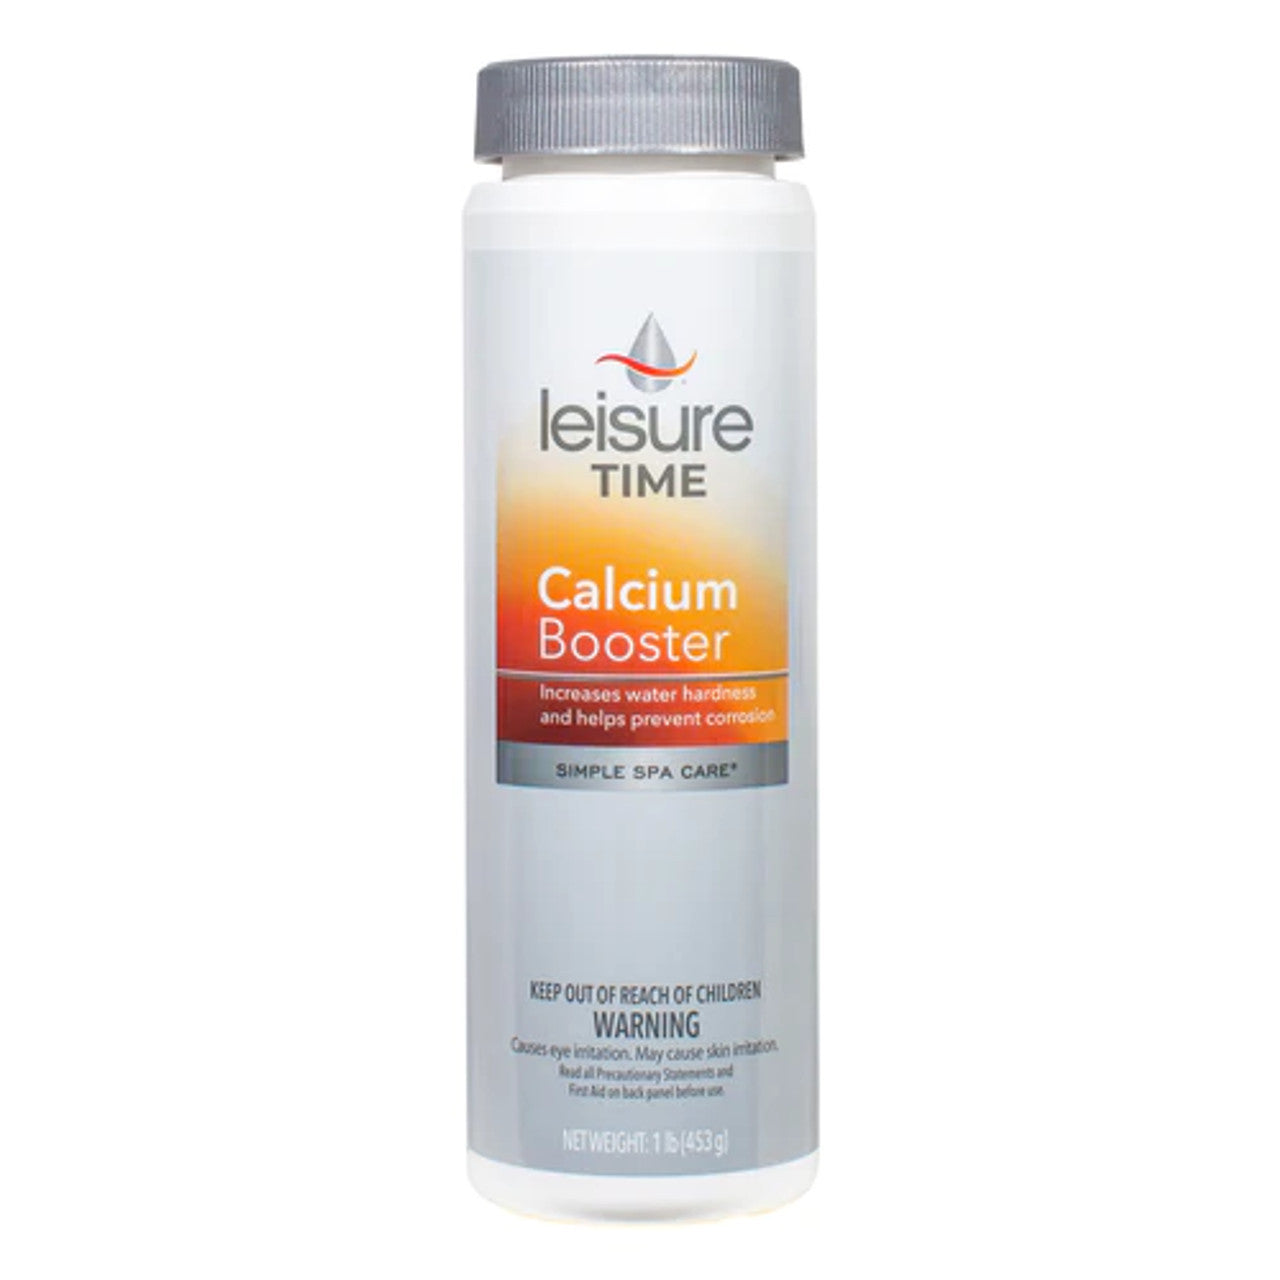 Leisure Time Calcium Booster 1 lb